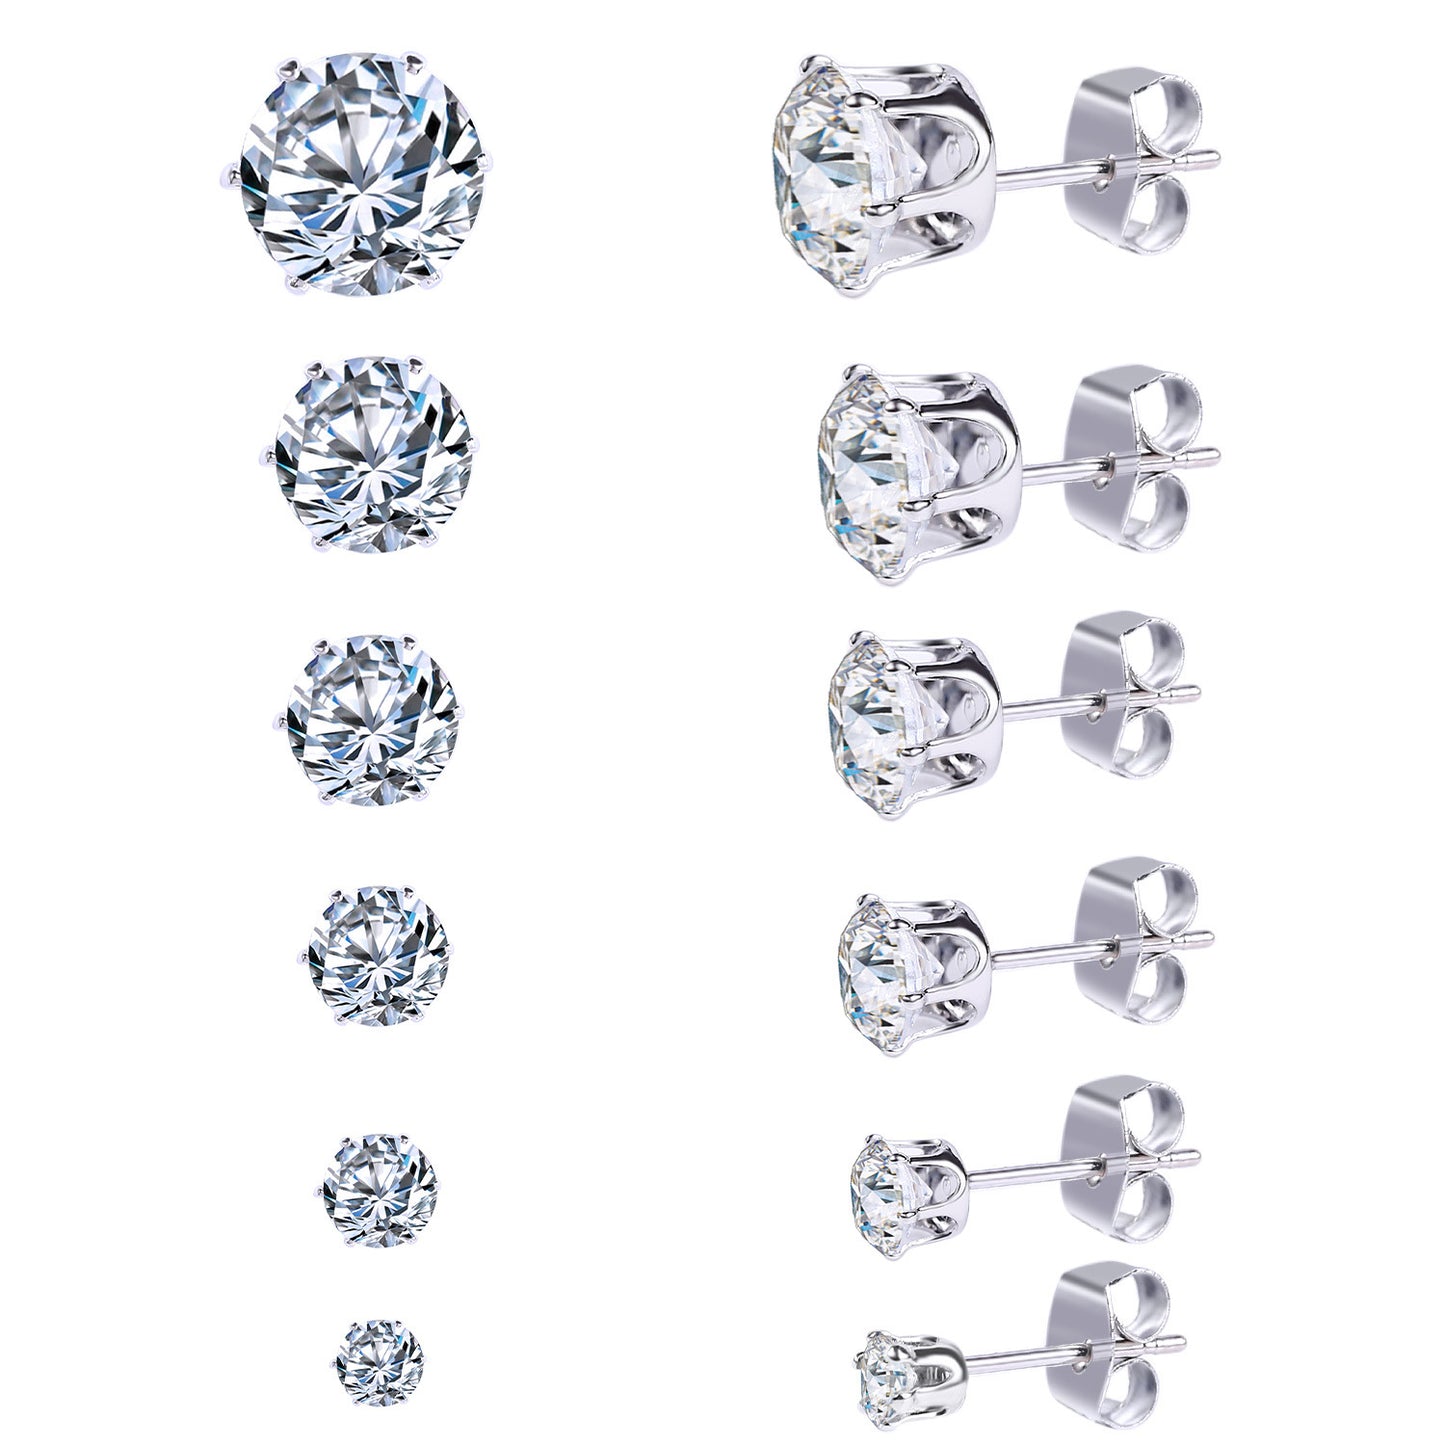 Zircon Earrings that have some Dazzle - Niki Ice Jewelry 